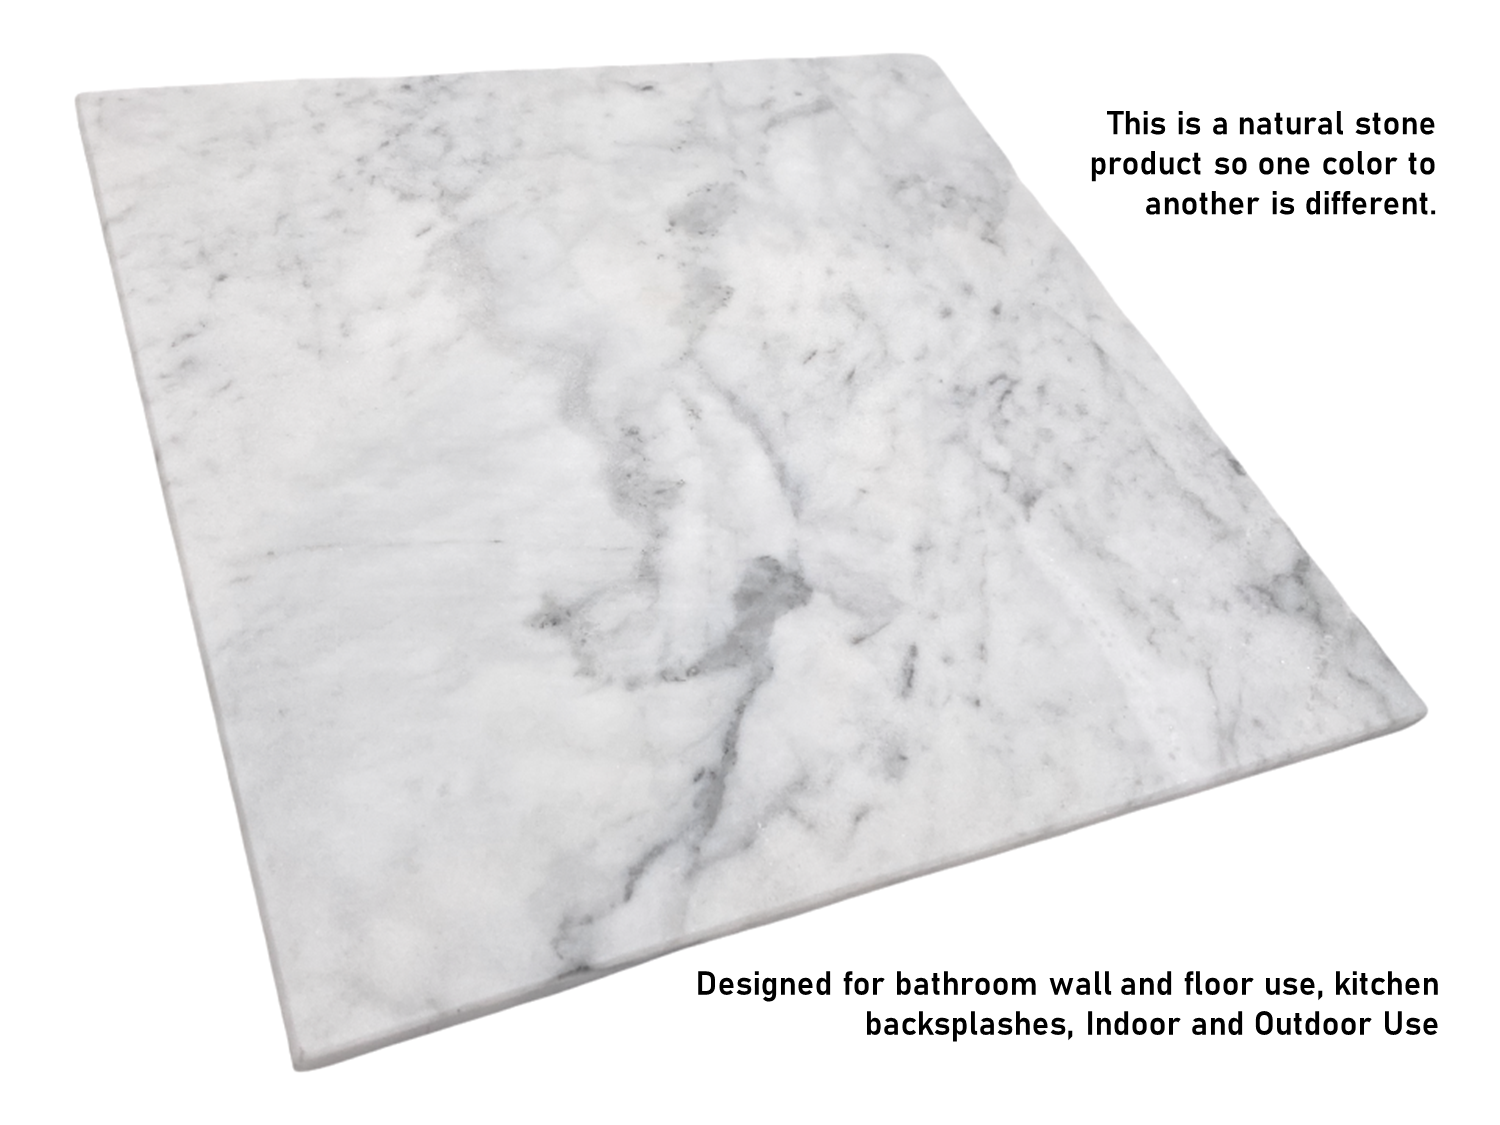 Italian White Carrara Marble Polished 12x12 Floor Wall Tile for Kitchen Backsplash, Bathroom Shower, Fireplace